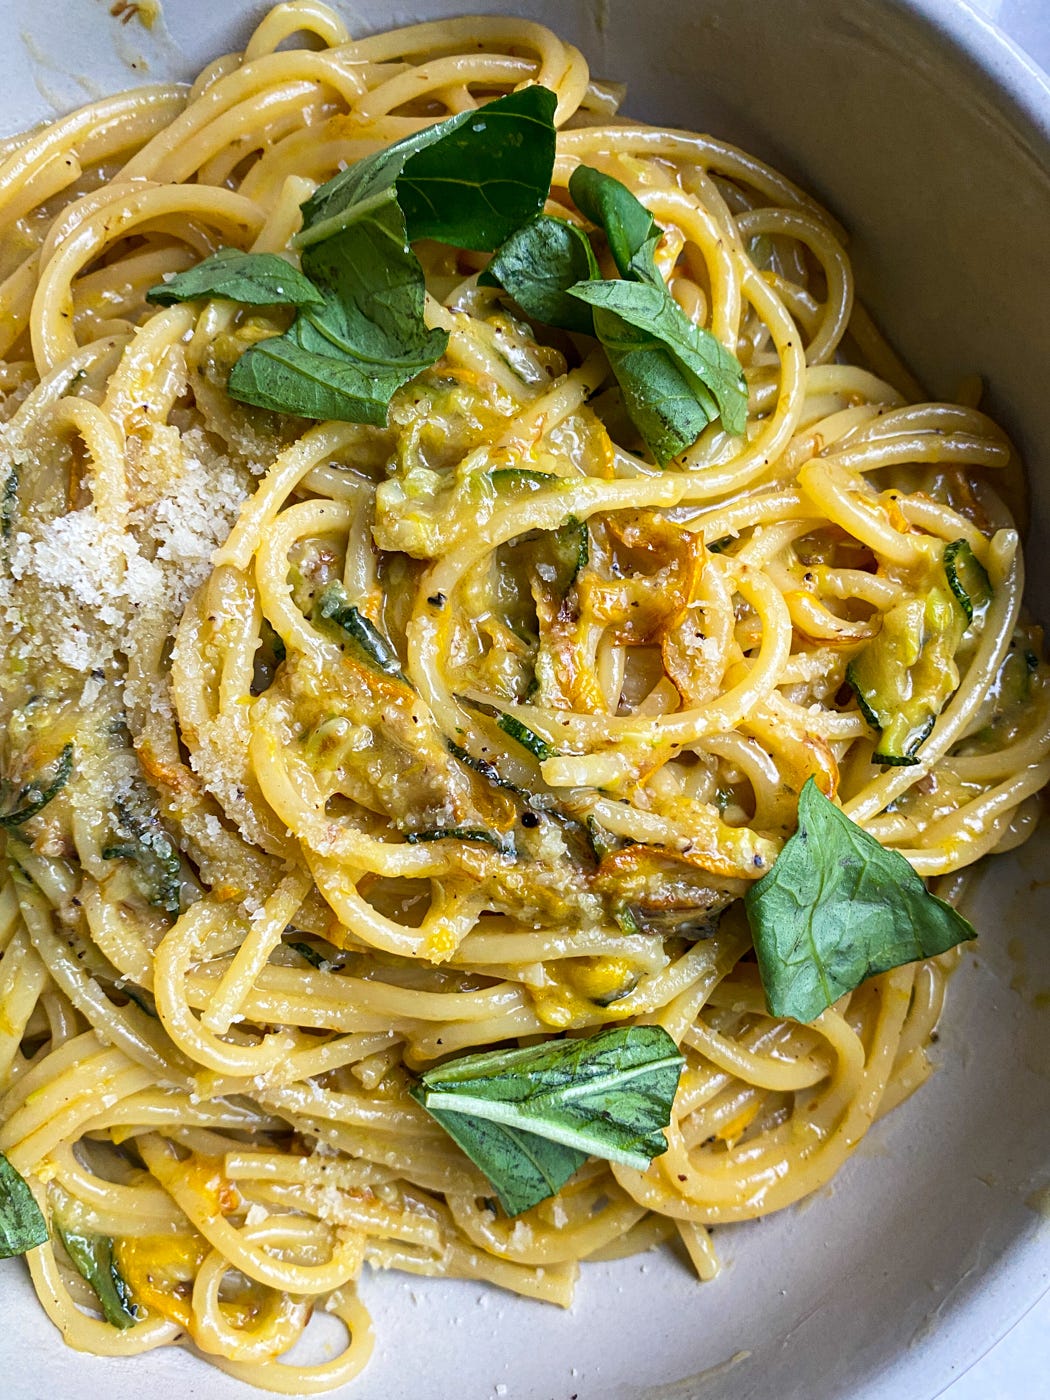 Yotam Ottolenghi's recipe to make pasta less boring